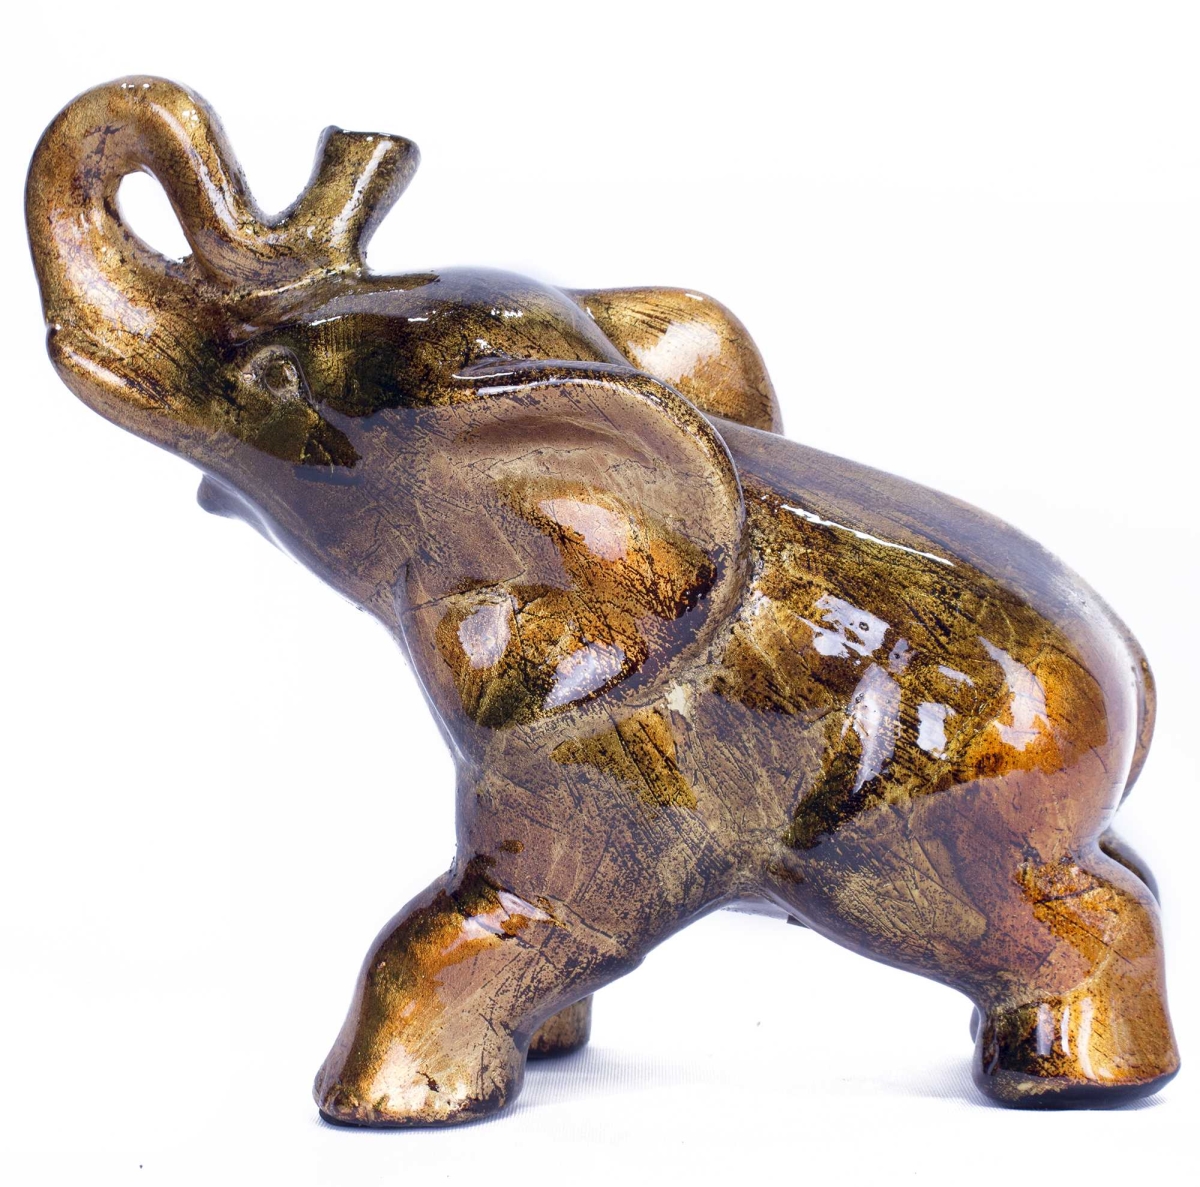 319652 8 In. Decorative Ceramic Elephant - Copper, Brown & Orange